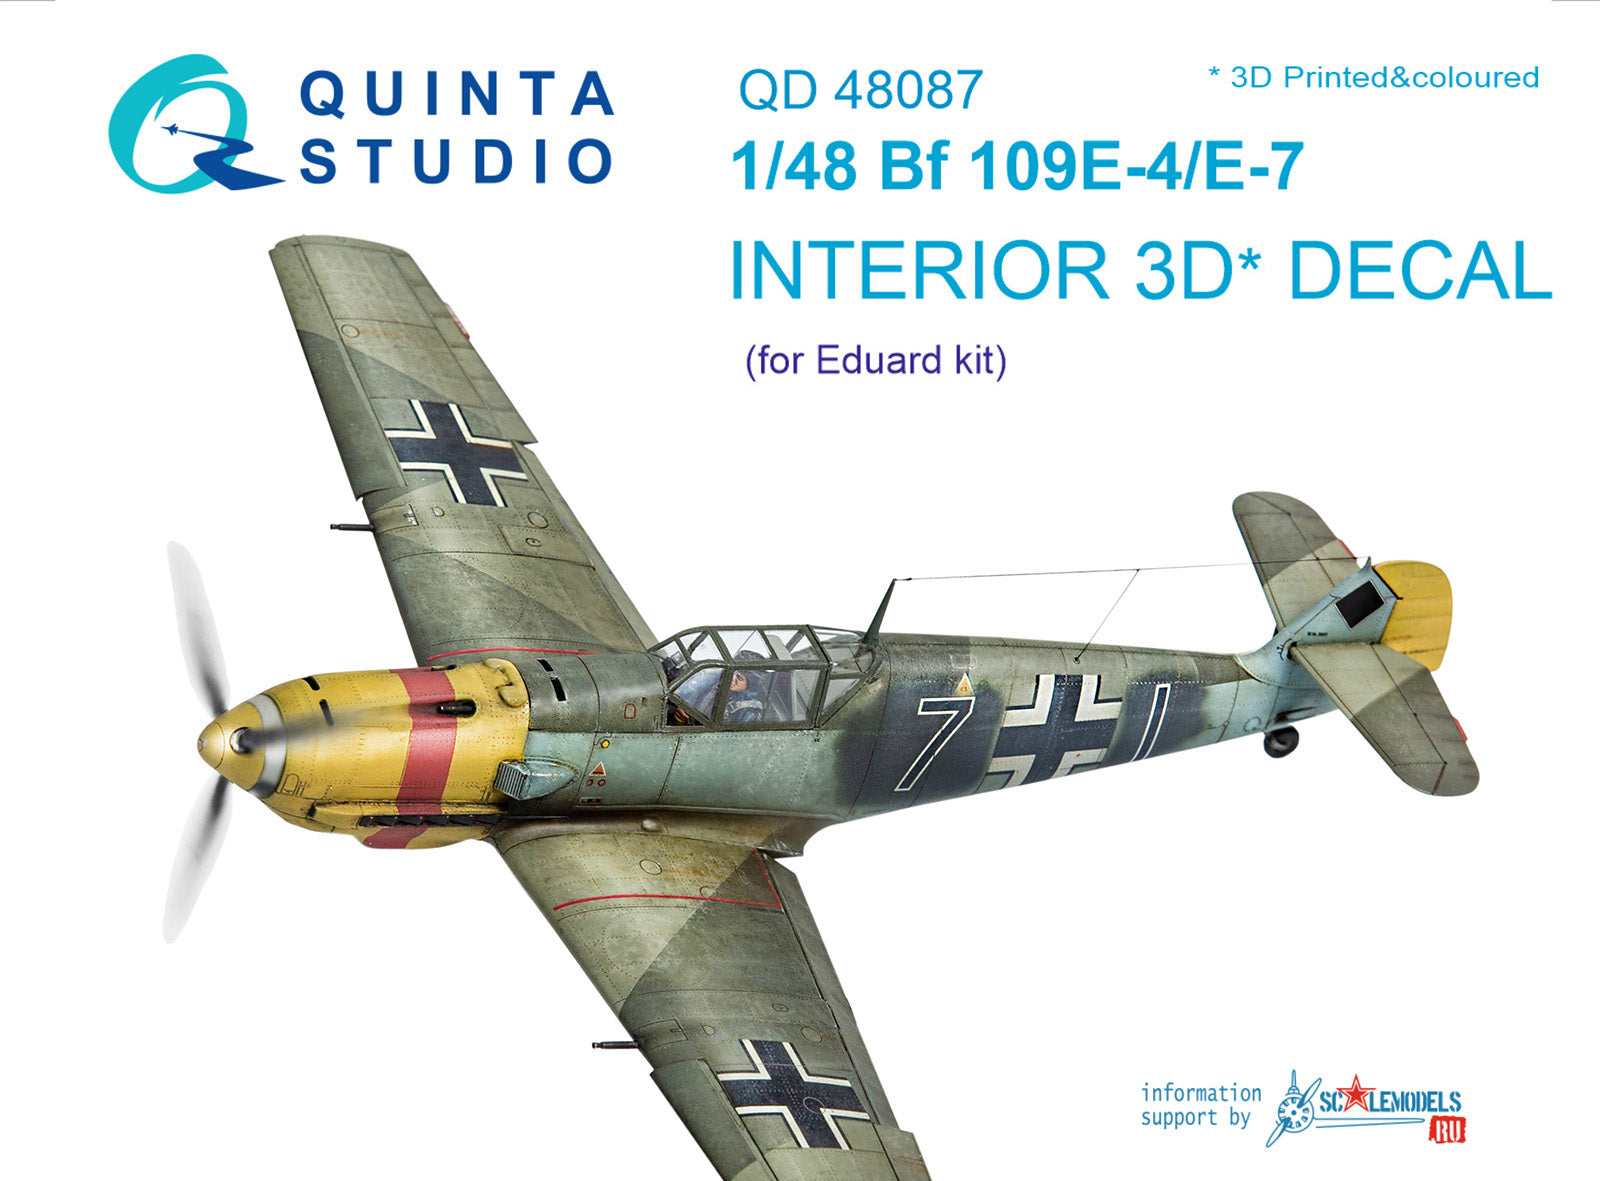 Quinta Studio - 1/48 Bf 109E4/E-7 - QD48087 for Eduard kit